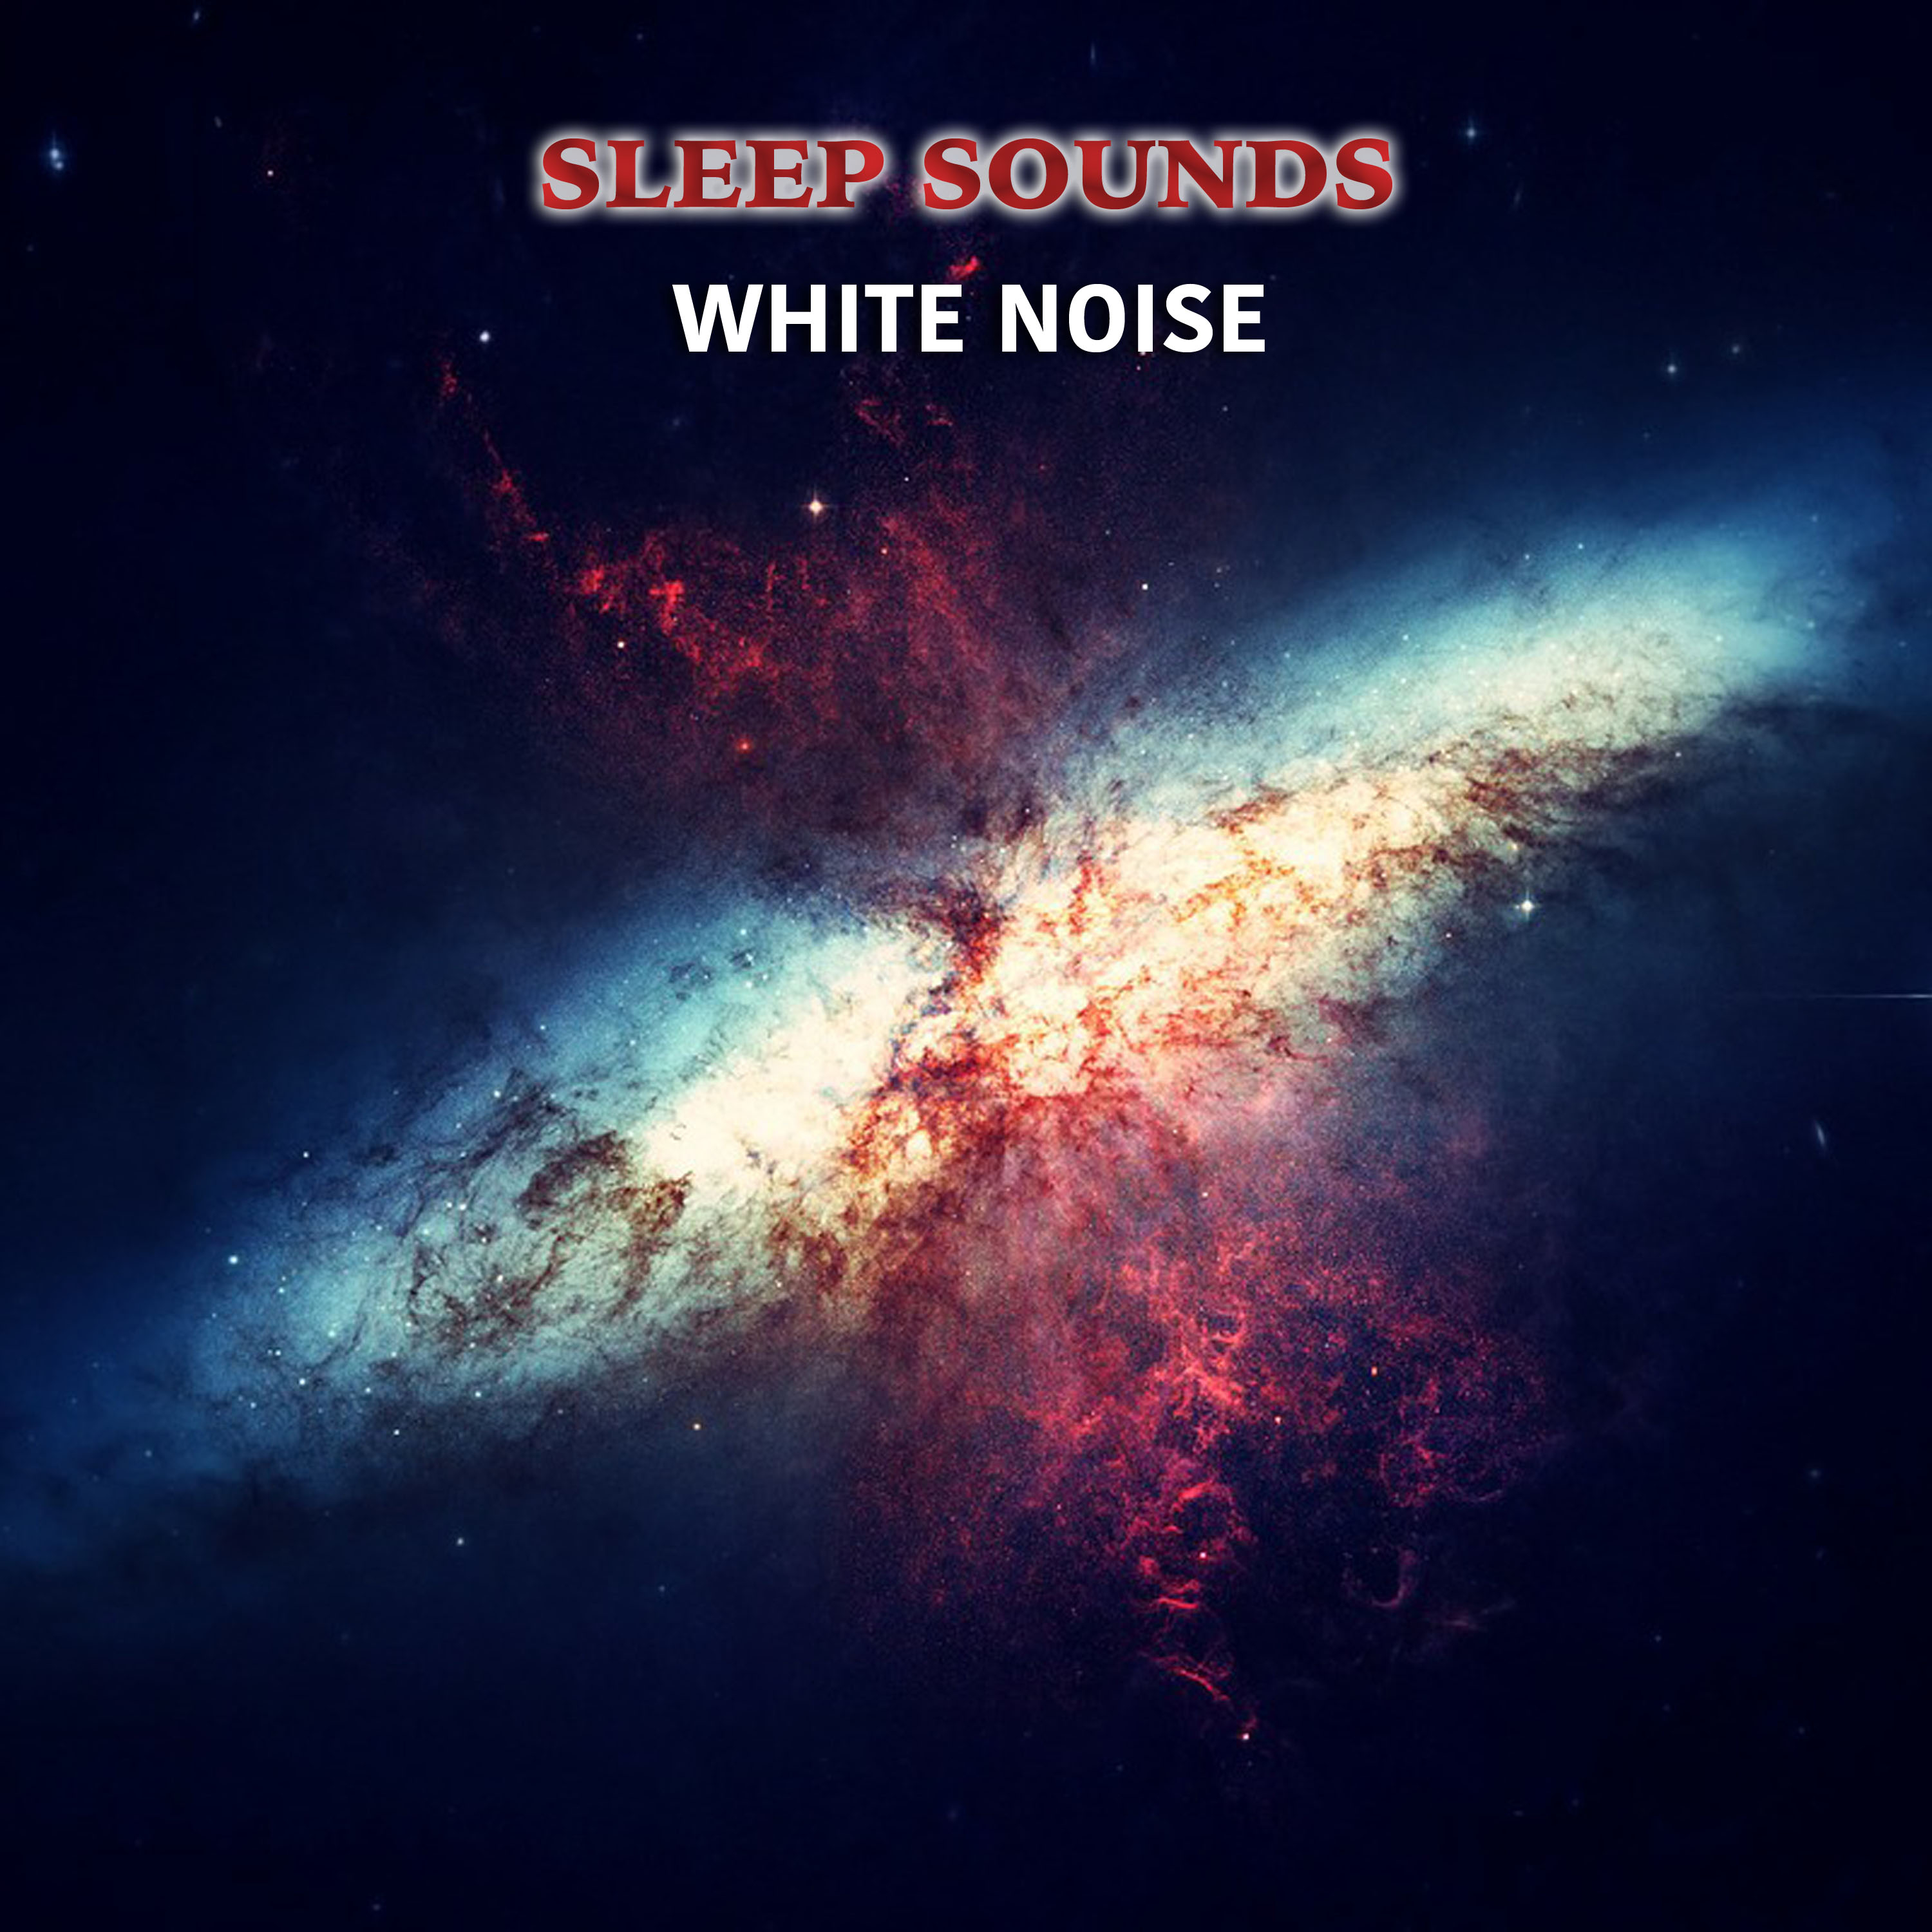 12 Sleep Sounds of White Noise